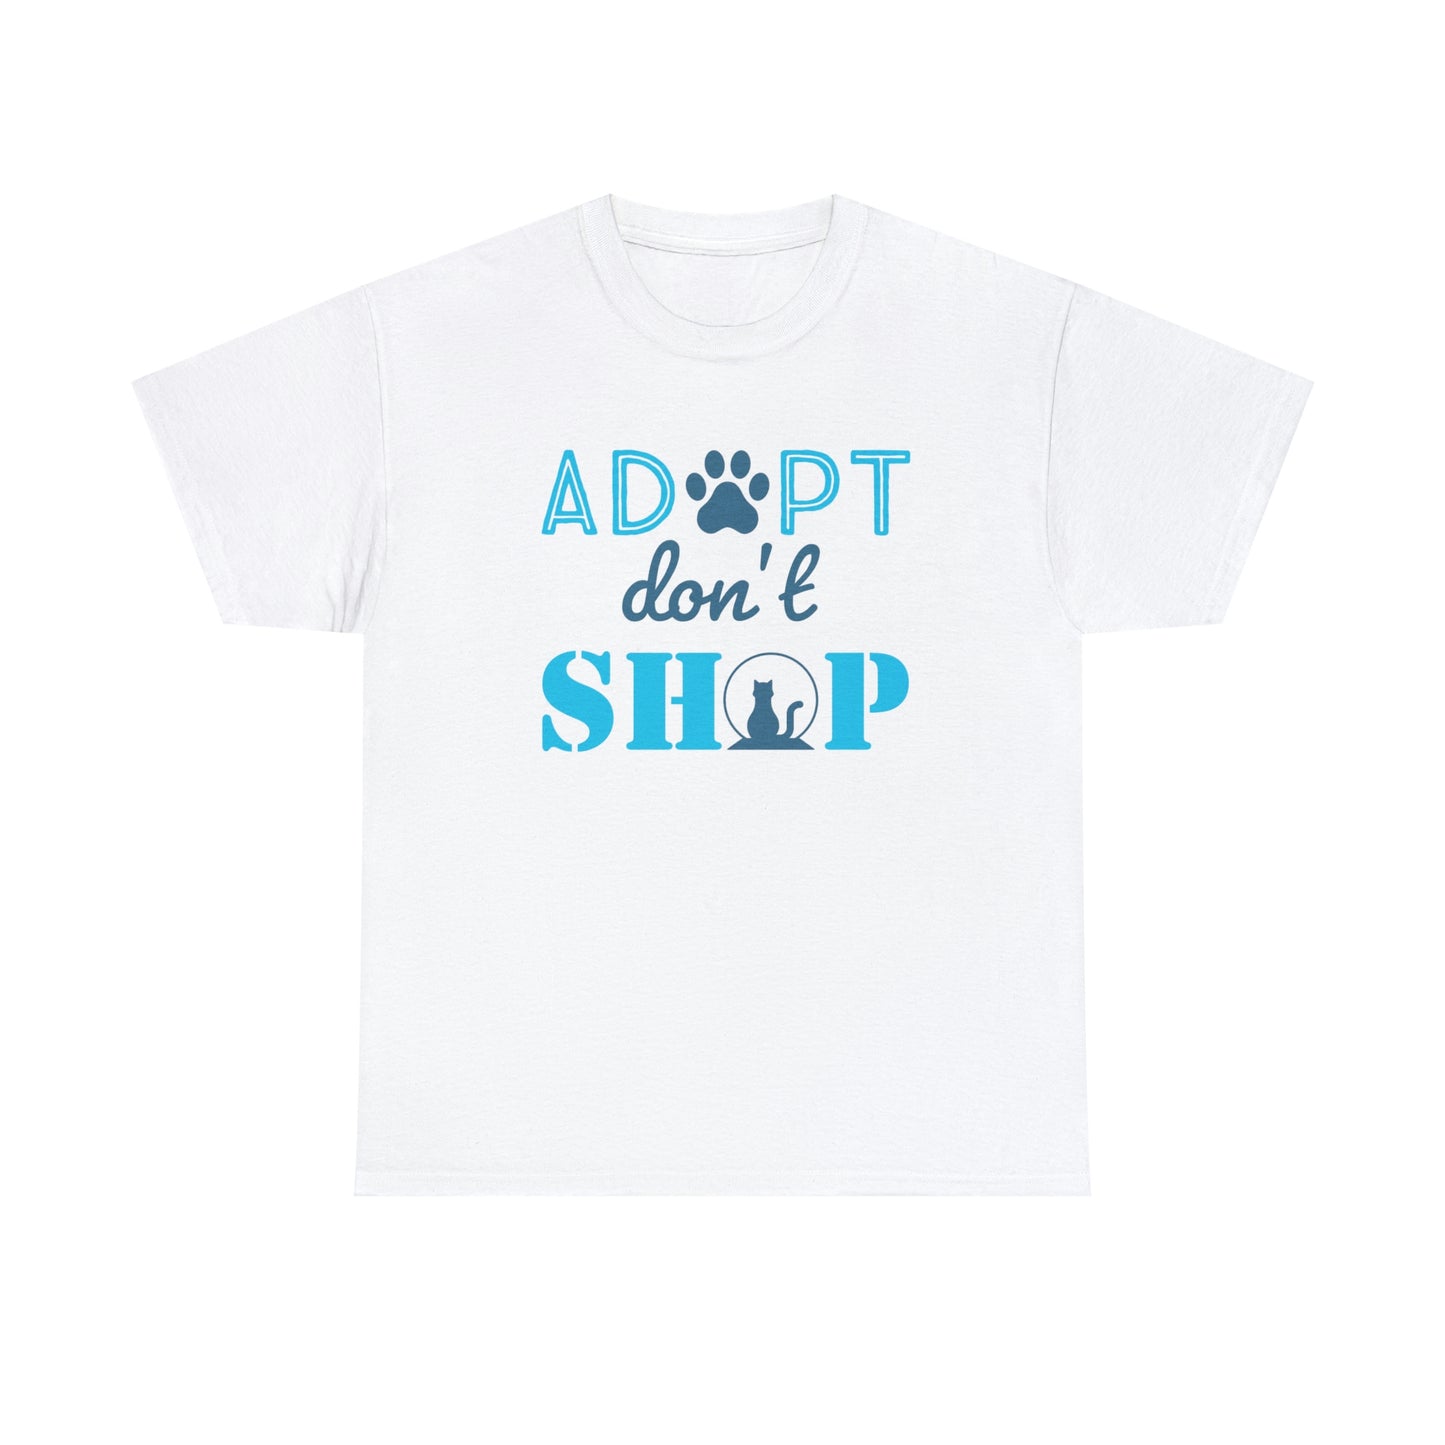 Pet Adoption T-Shirt For Animal Rescue T Shirt For Pet Rescue TShirt For Animal Activist Gift